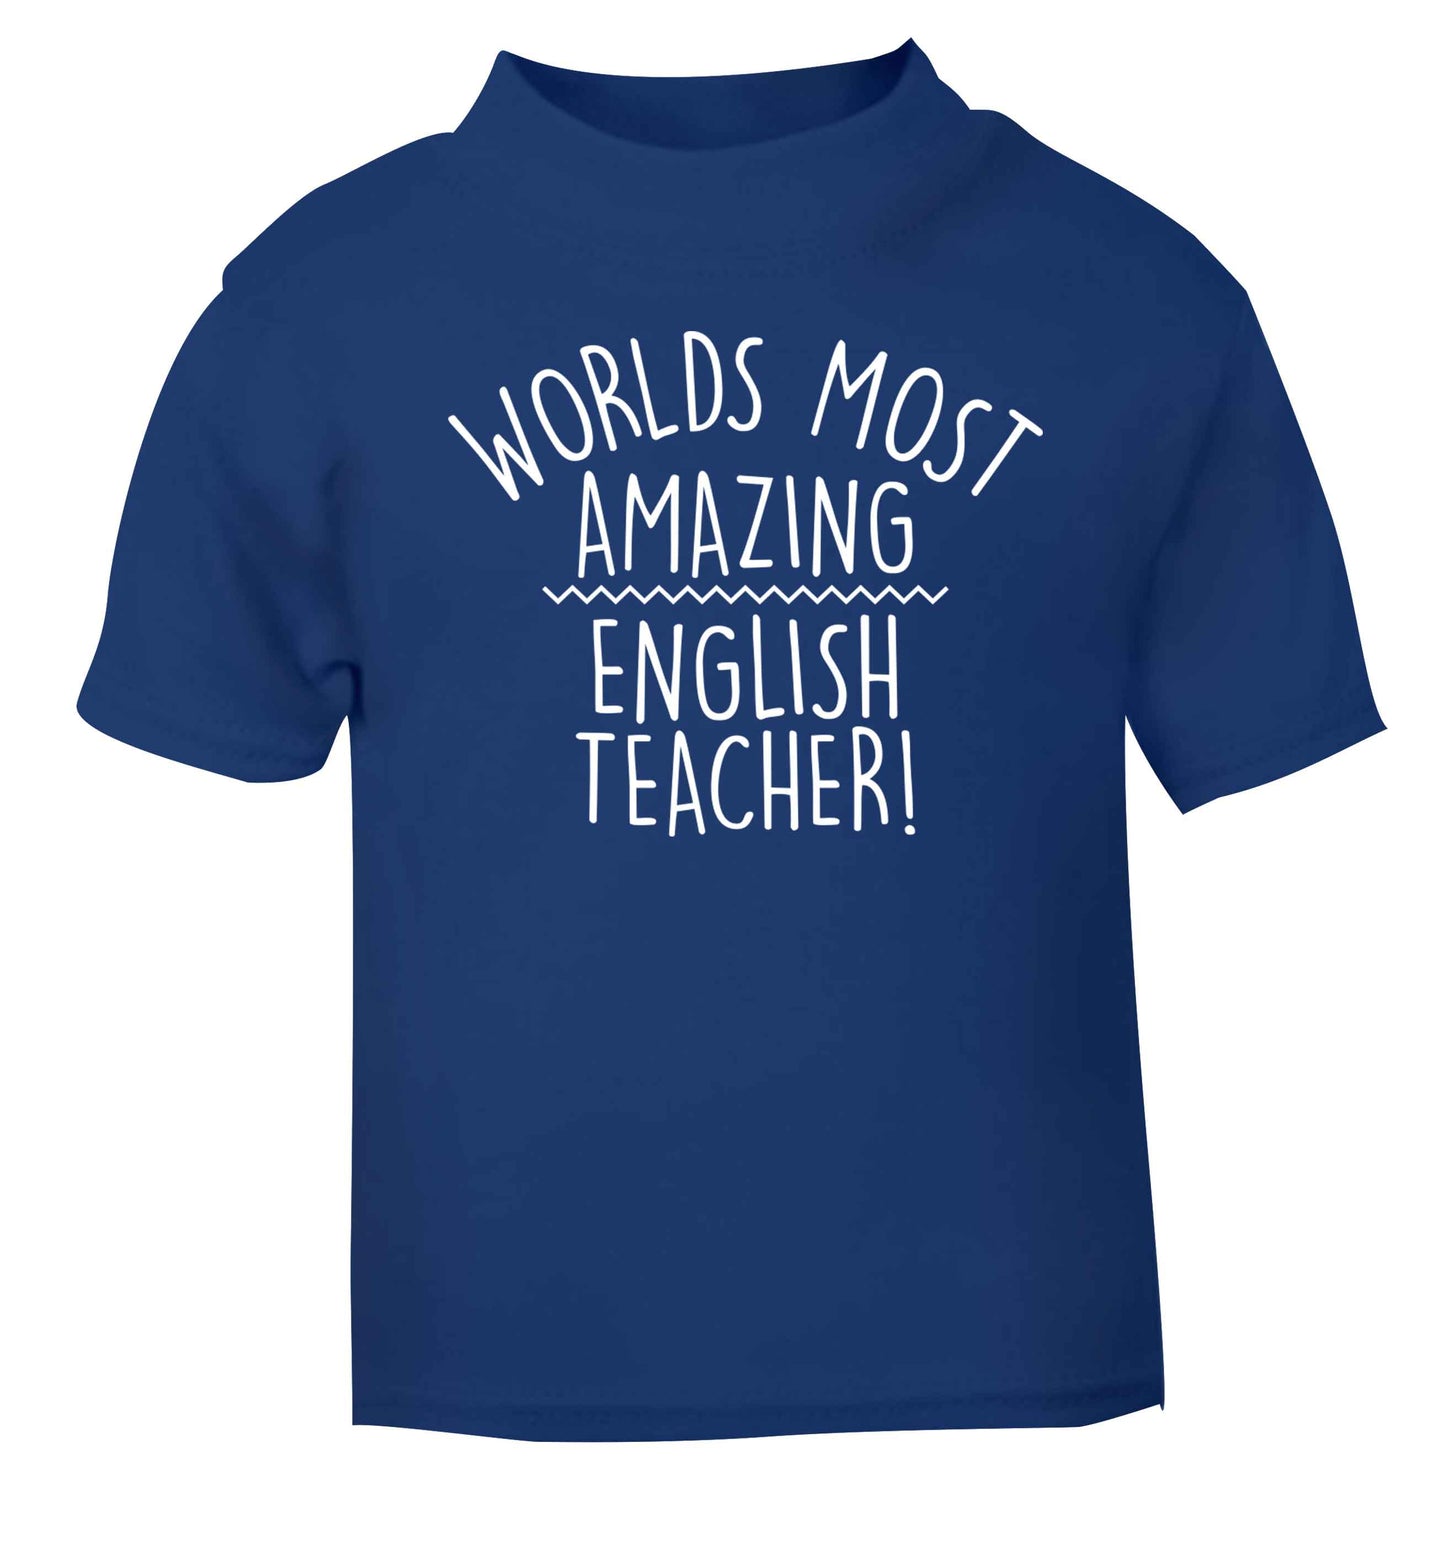 Worlds most amazing English teacher blue baby toddler Tshirt 2 Years